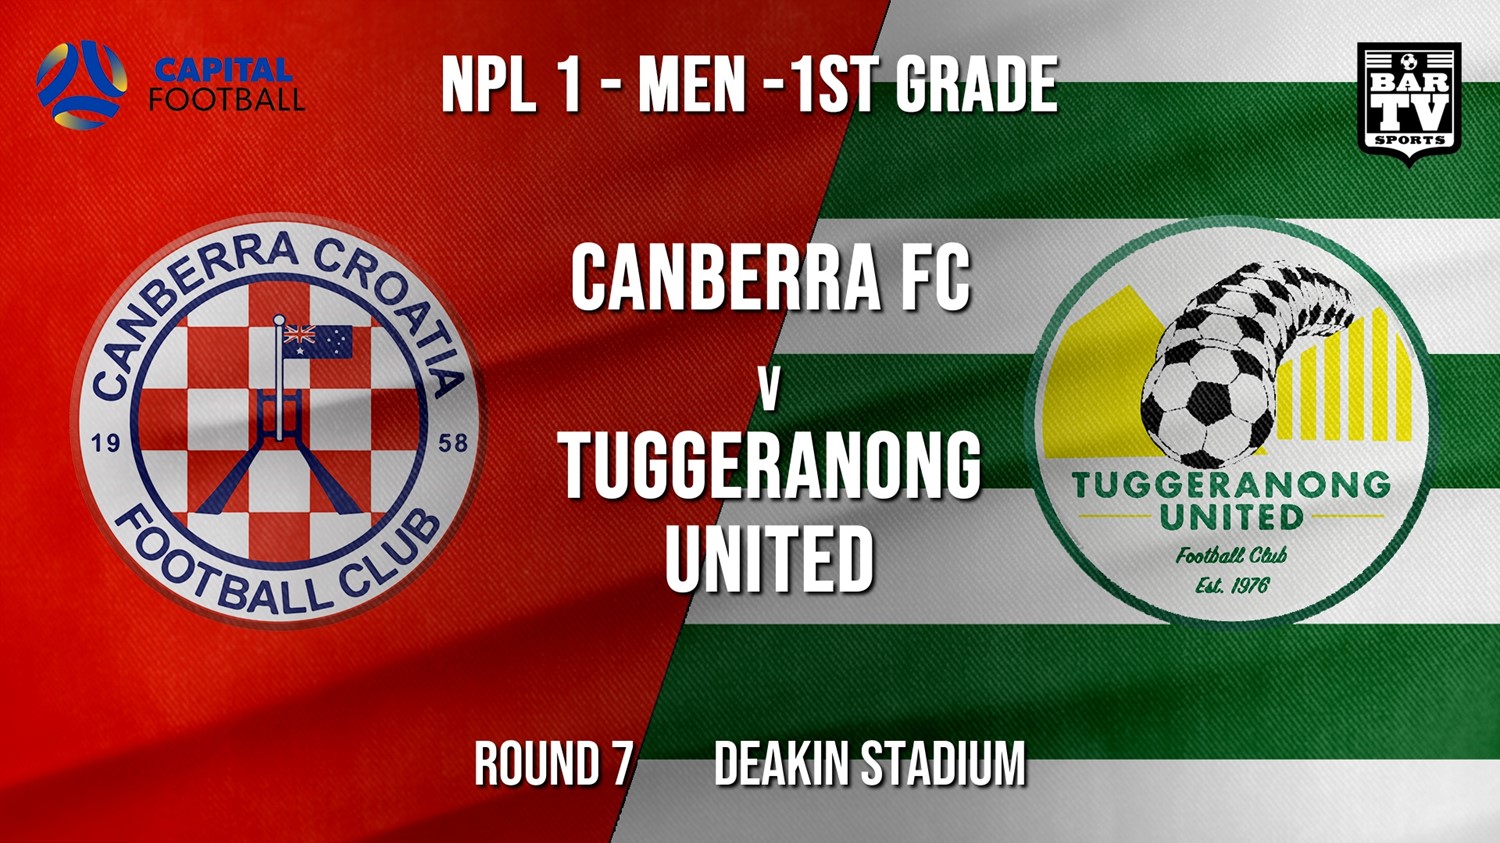 NPL - CAPITAL Round 7 - Canberra FC v Tuggeranong United FC Minigame Slate Image